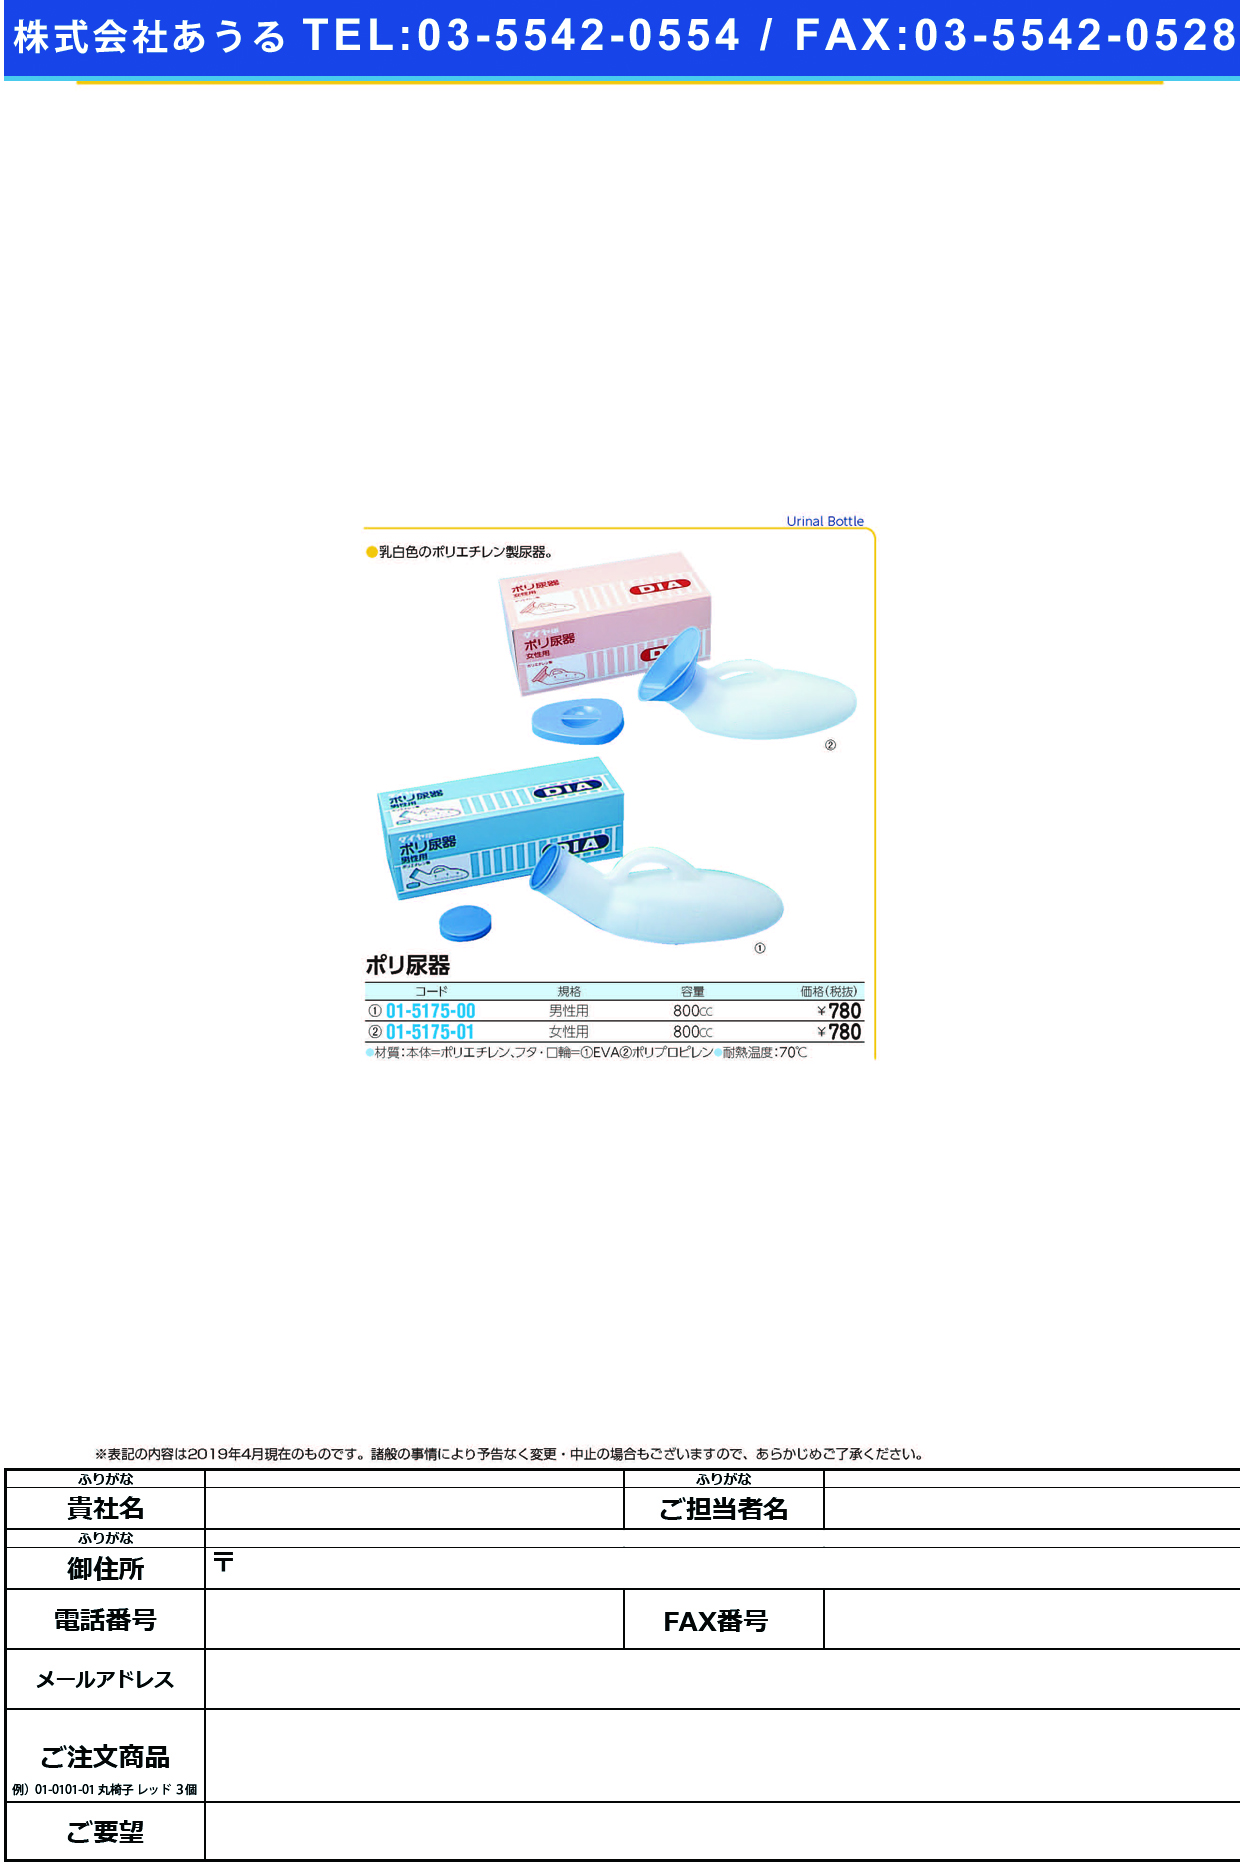 (01-5175-01)ダイヤ印ポリ尿器（女性用） 800CC ﾀﾞｲﾔｼﾞﾙｼﾎﾟﾘﾆｮｳｷｼﾞｮｾｲ【1個単位】【2019年カタログ商品】